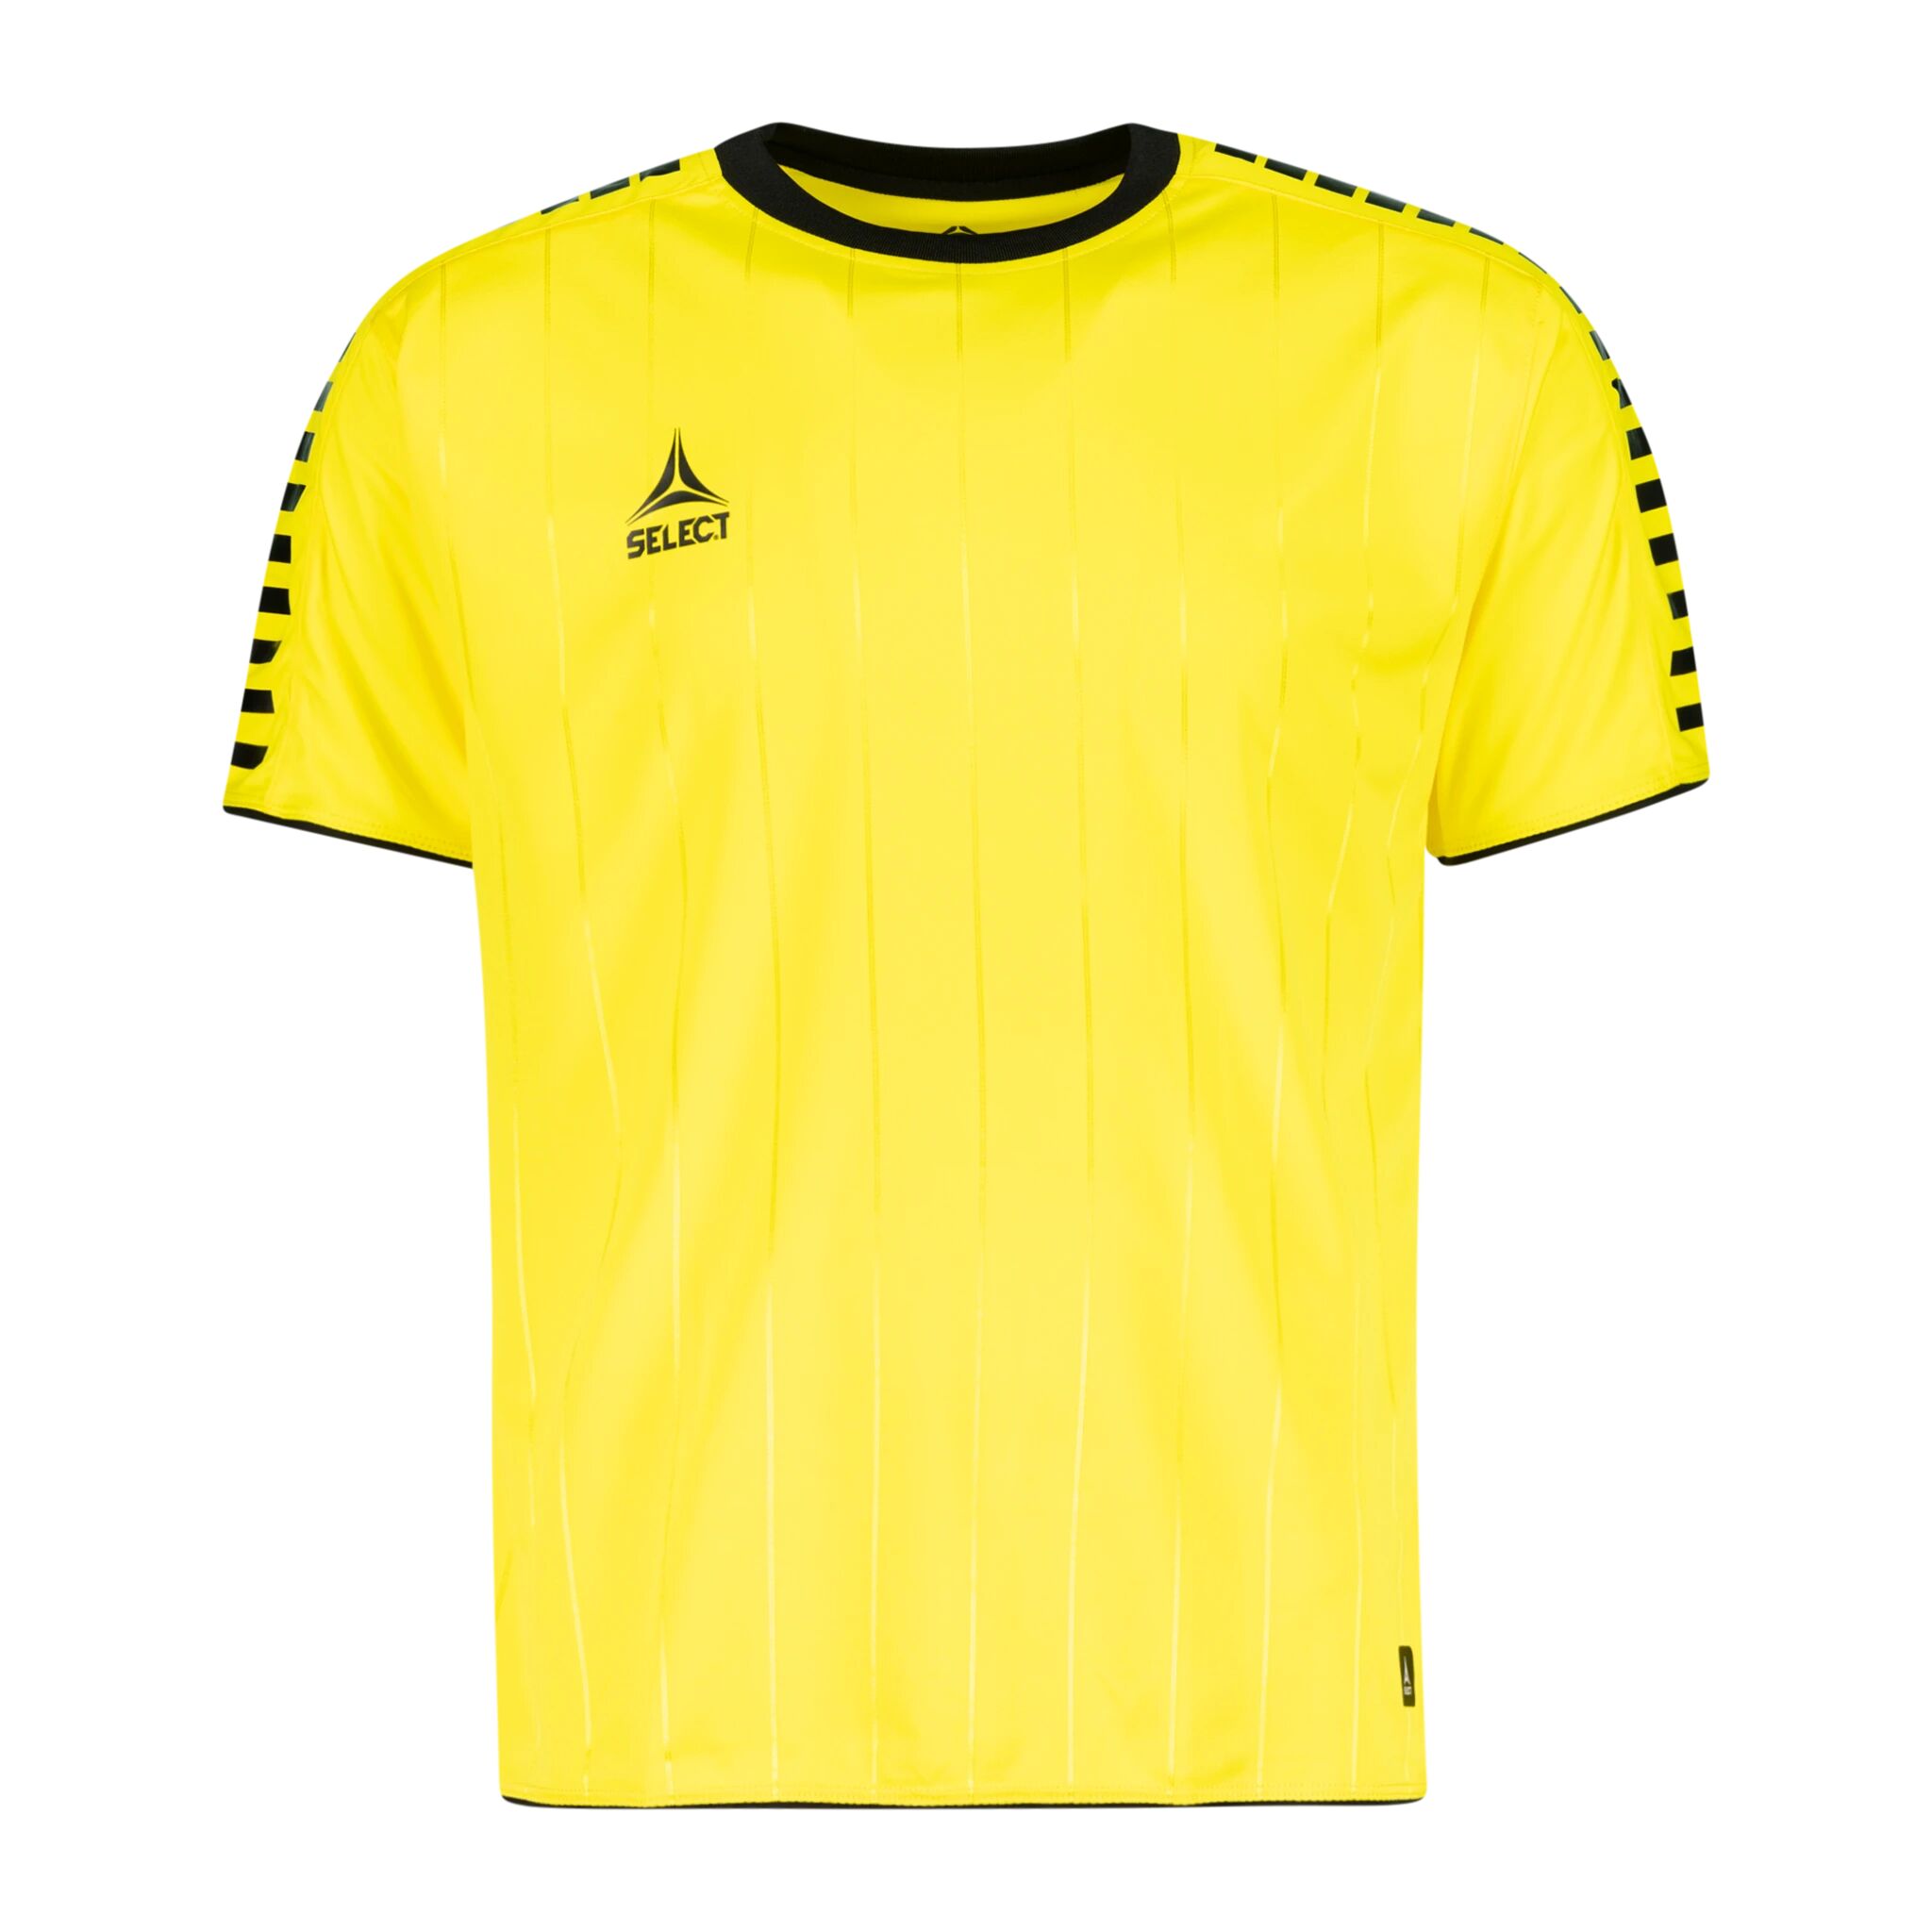 Select Player shirt S/S Argentina, fotballtrøye senior 128 Yellow/Black